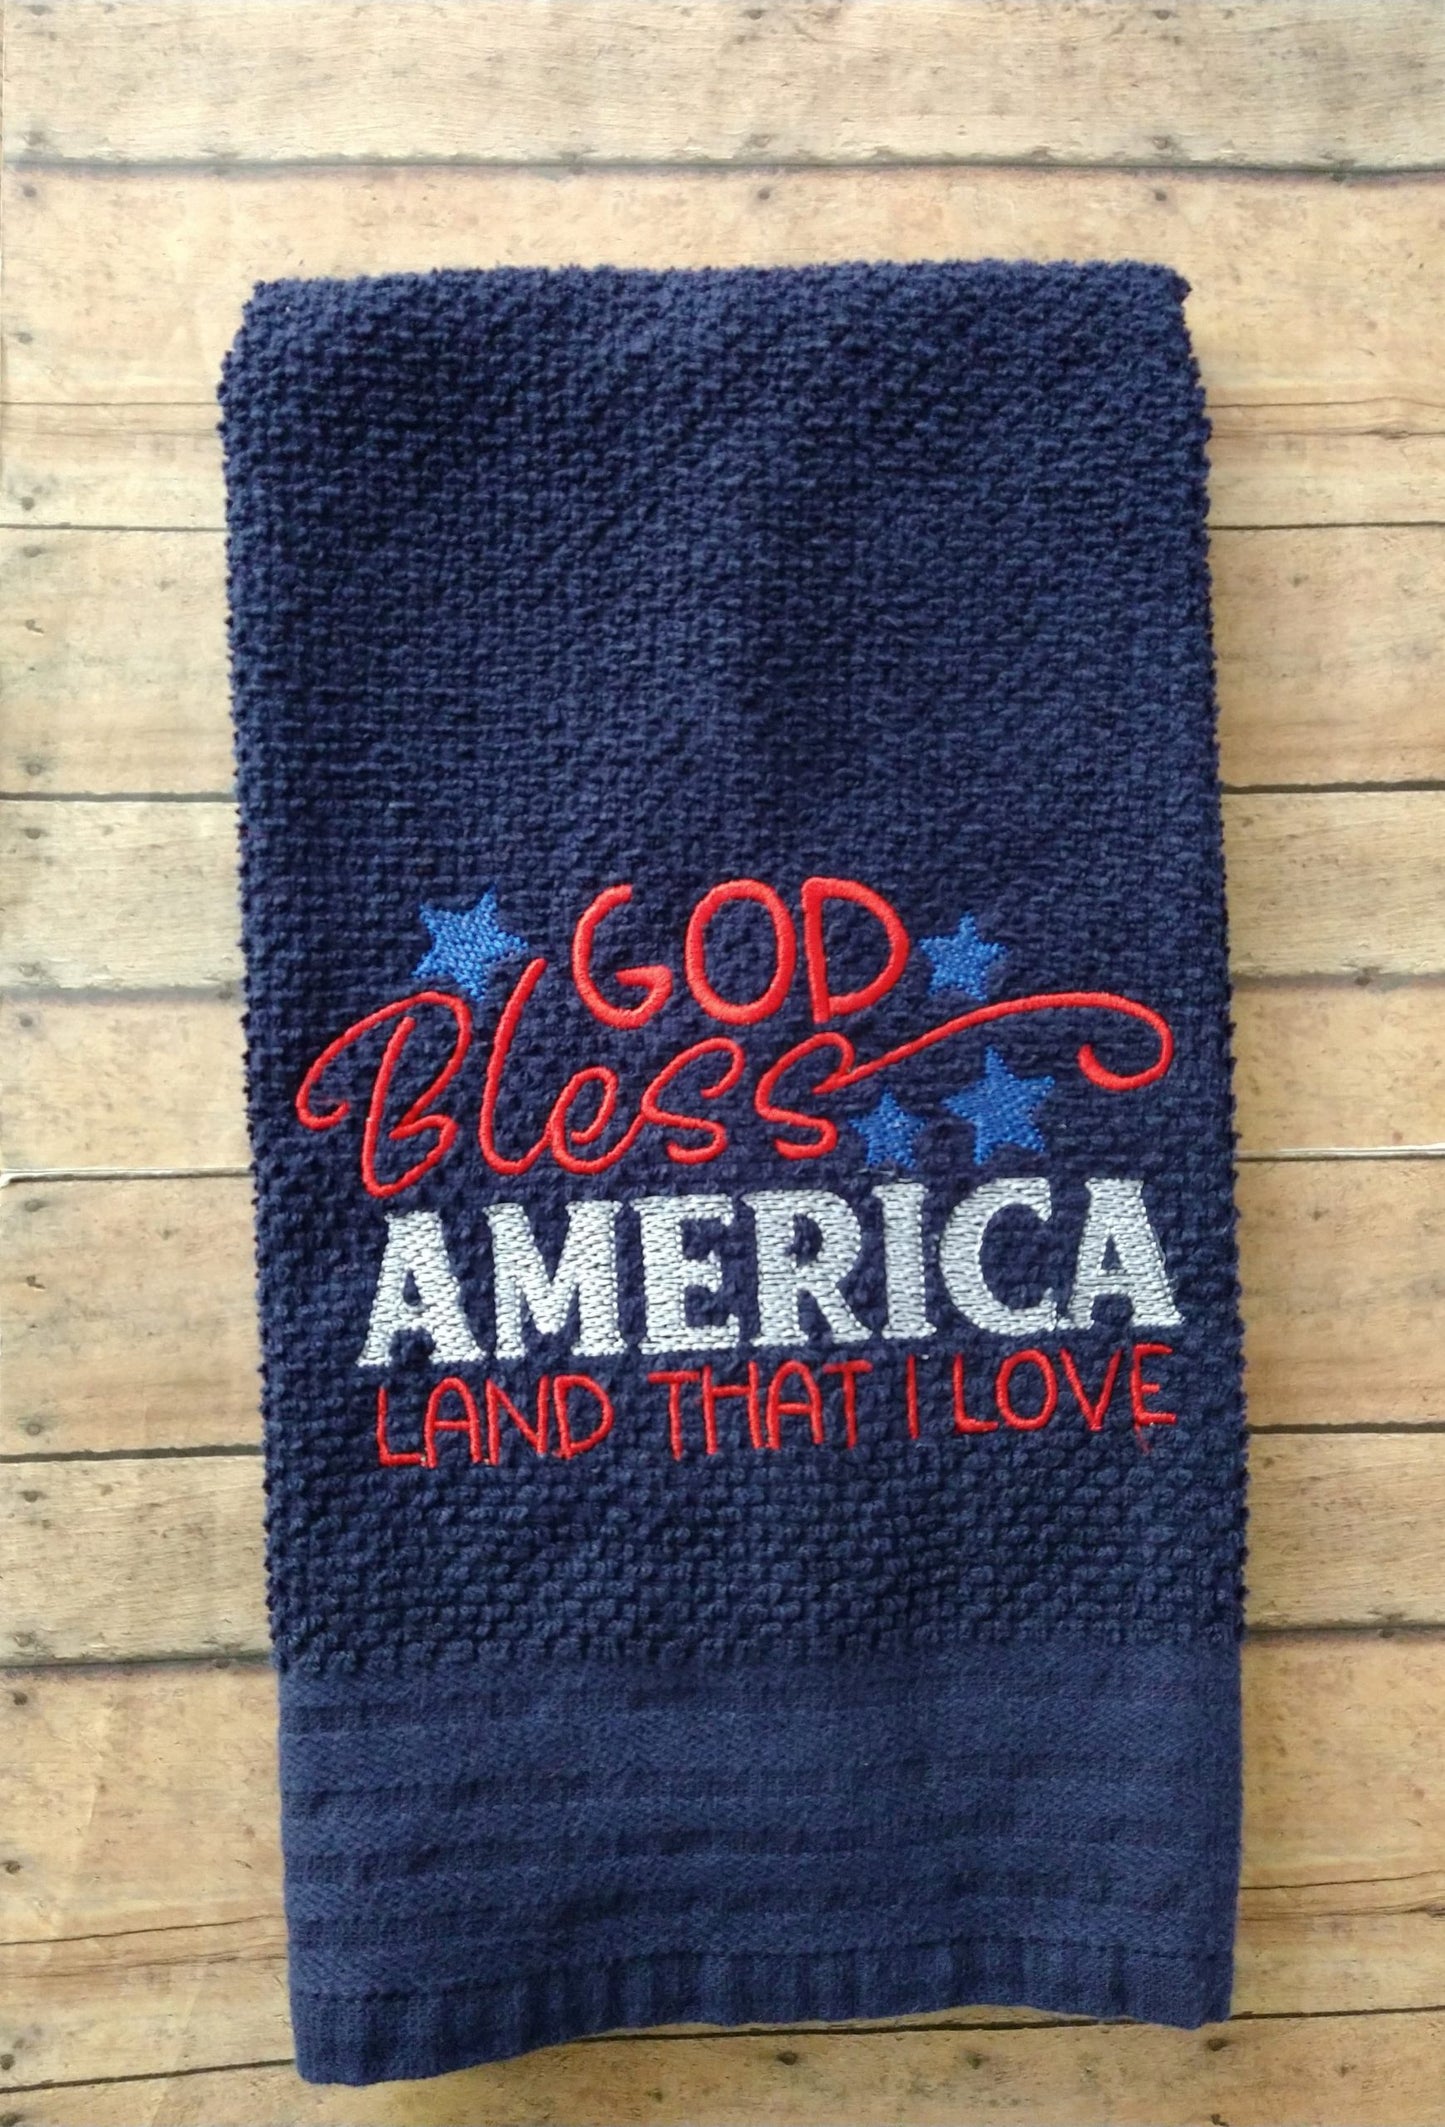 God Bless America - 3 sizes- Digital Embroidery Design